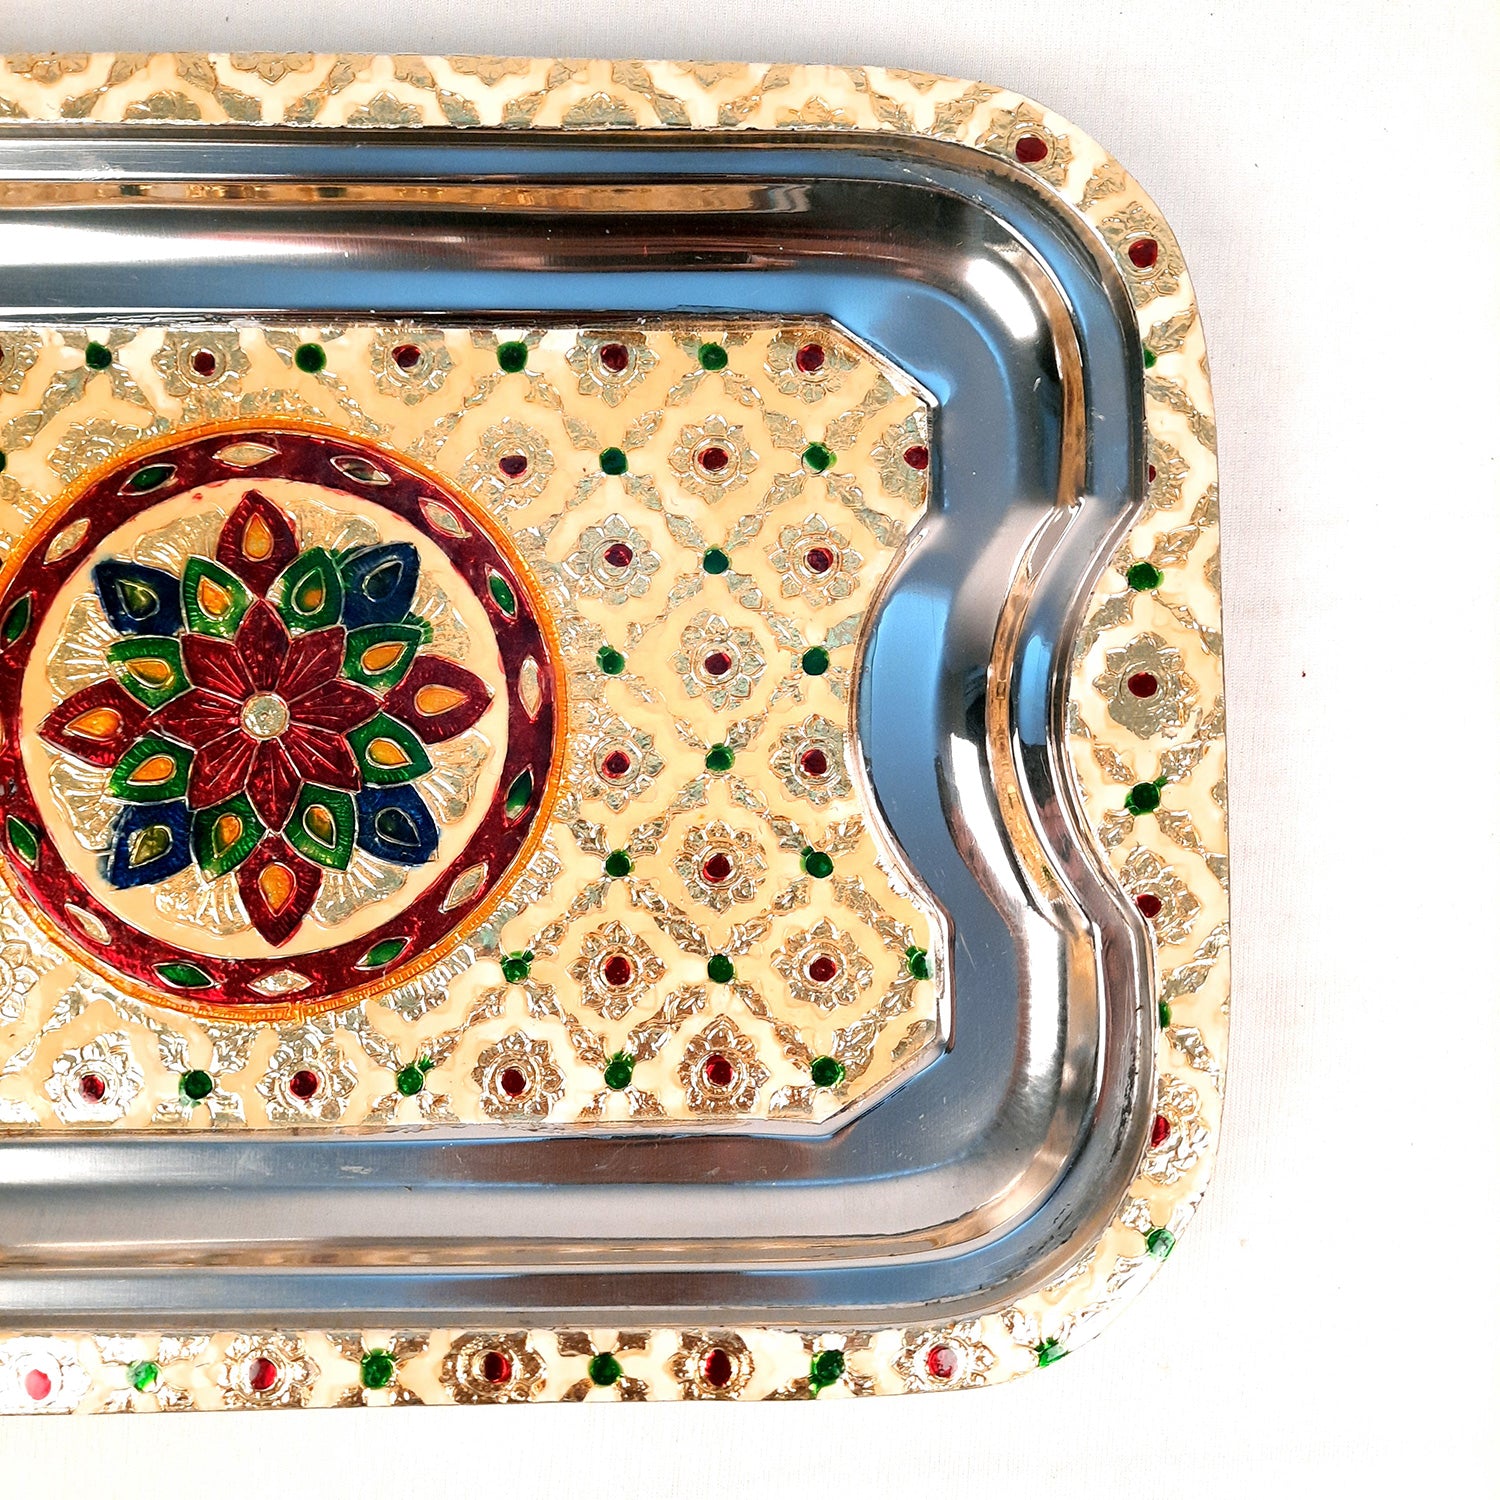 Serving Tray | Tea & Snacks Serving Platter | Steel Tray Rectangular - for Home, Dining Table, Kitchen Decor | Wedding & Housewarming Gift - 14 Inch - Apkamart